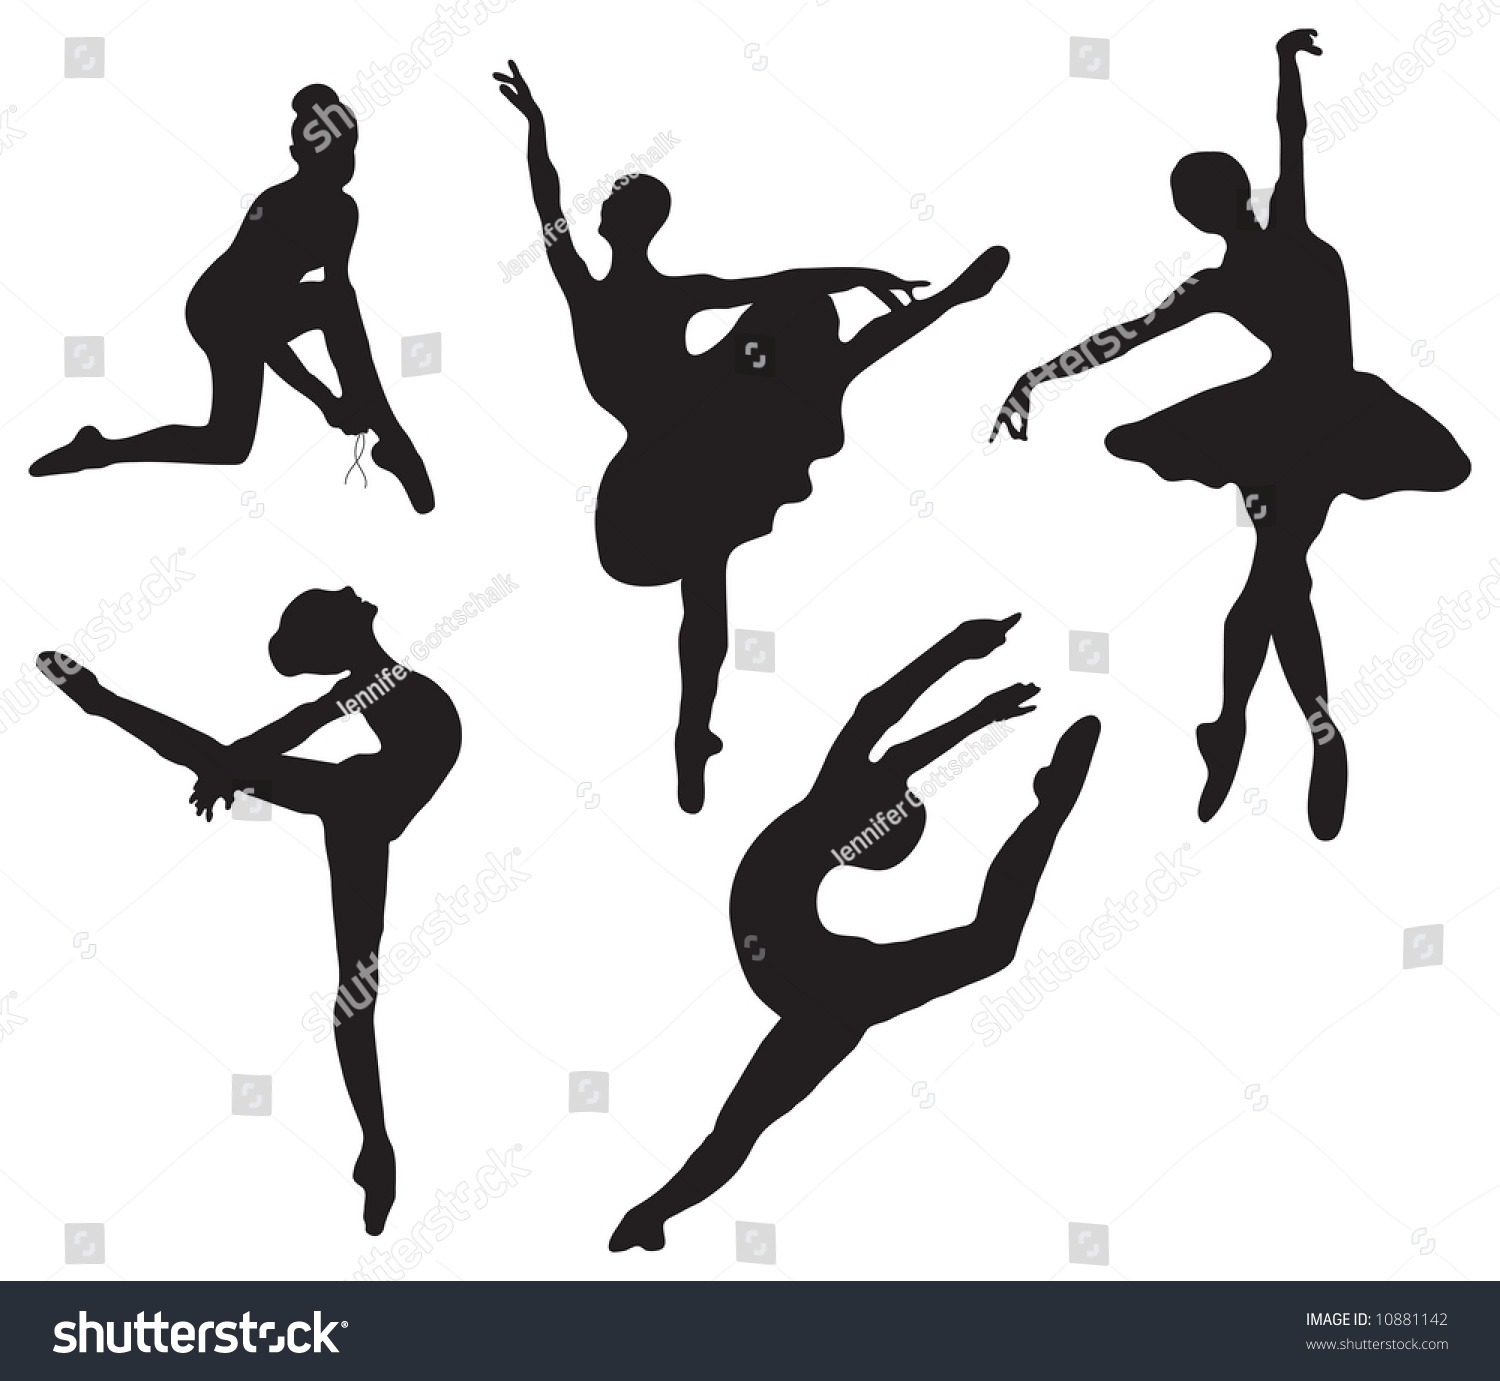 dance pose clipart - photo #11